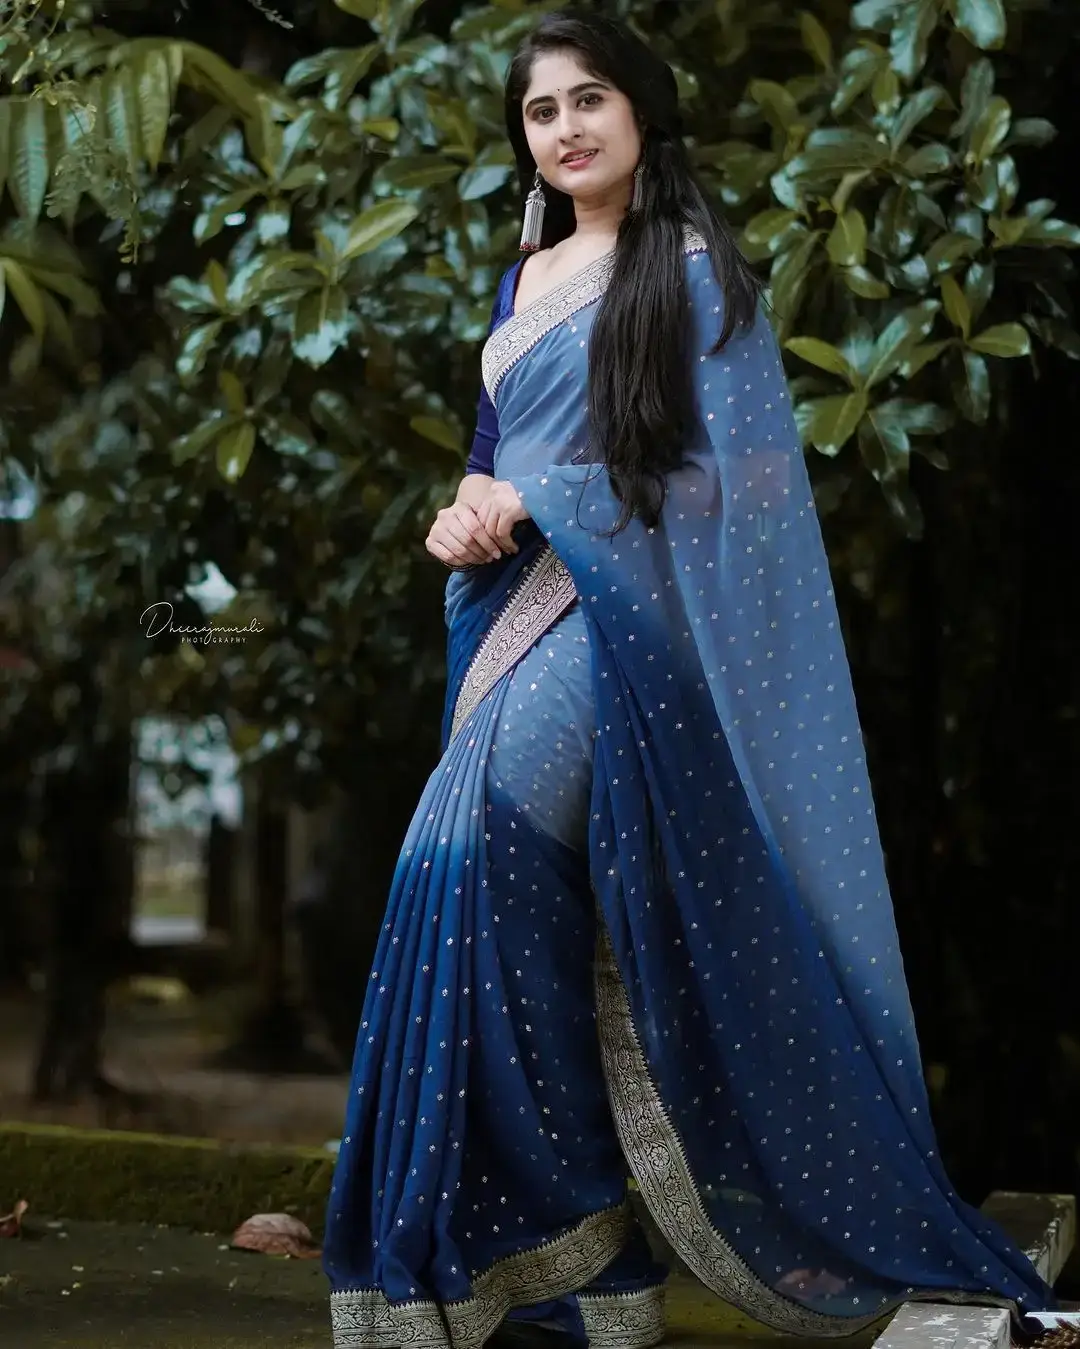 INDIAN TV ACTRESS KRISHNA PRIYA NAIR IN BLUE SAREE 3